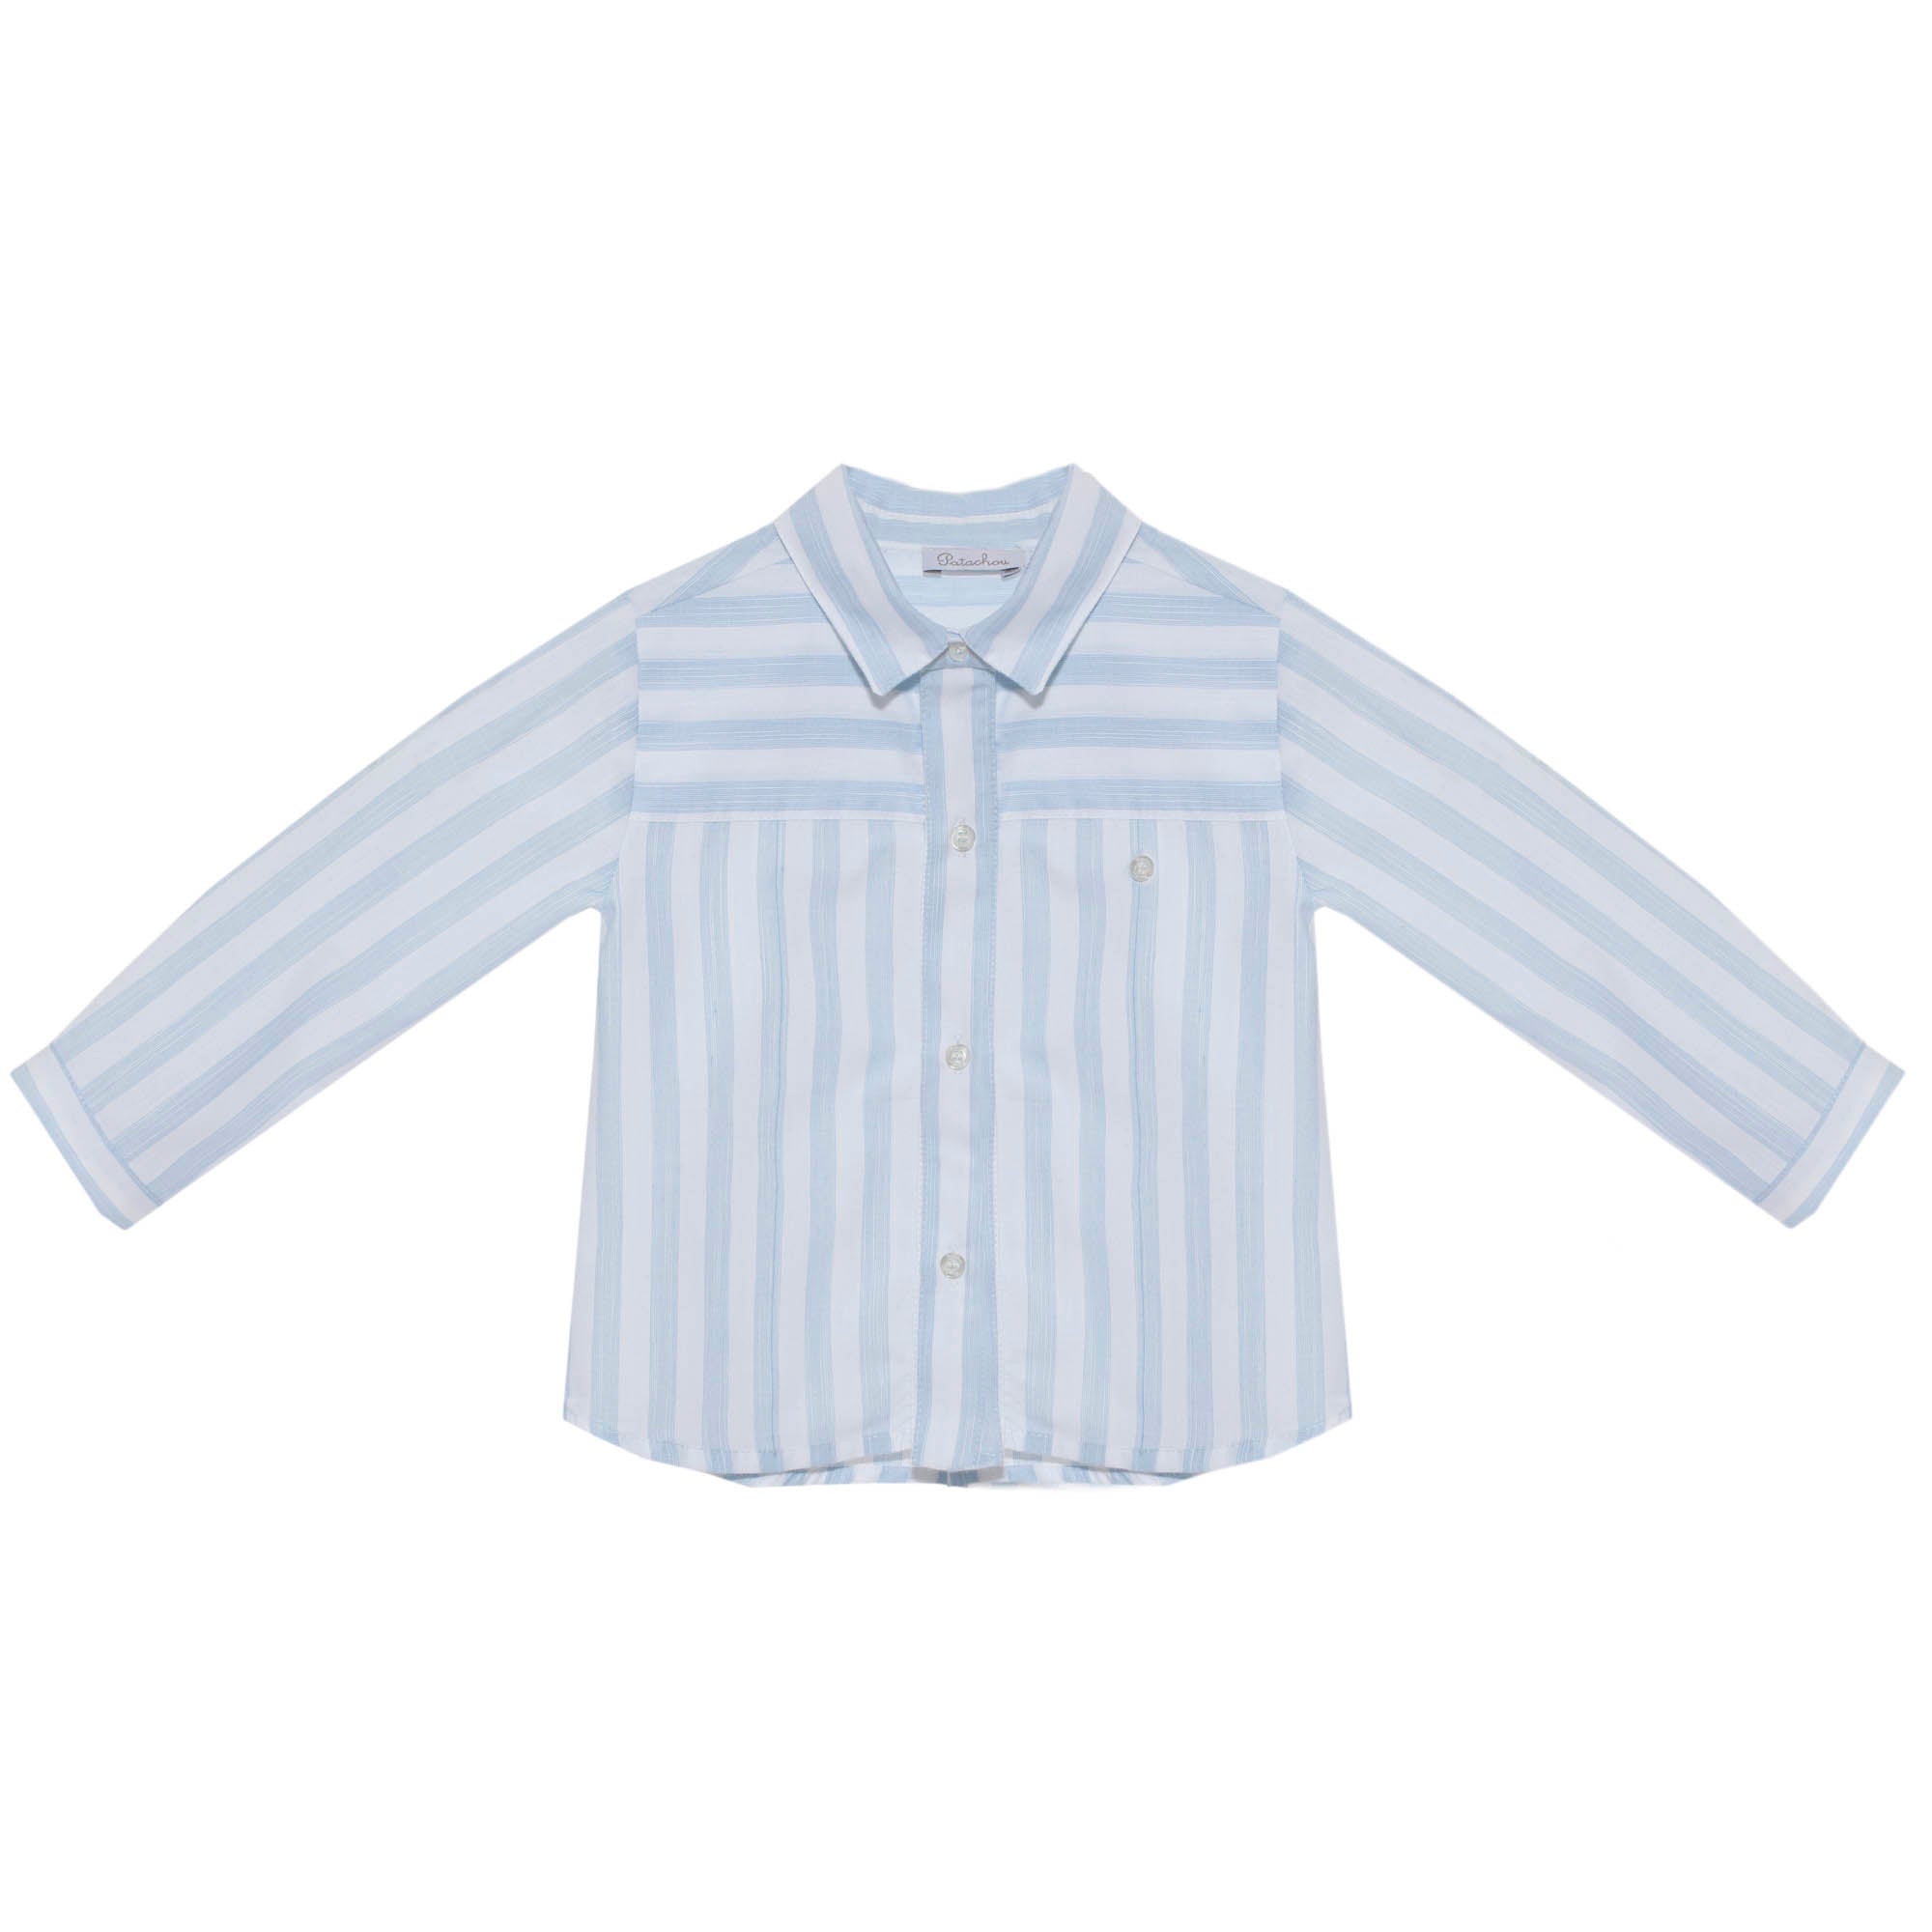 Patachou boys button down dress shirt in blue stripes